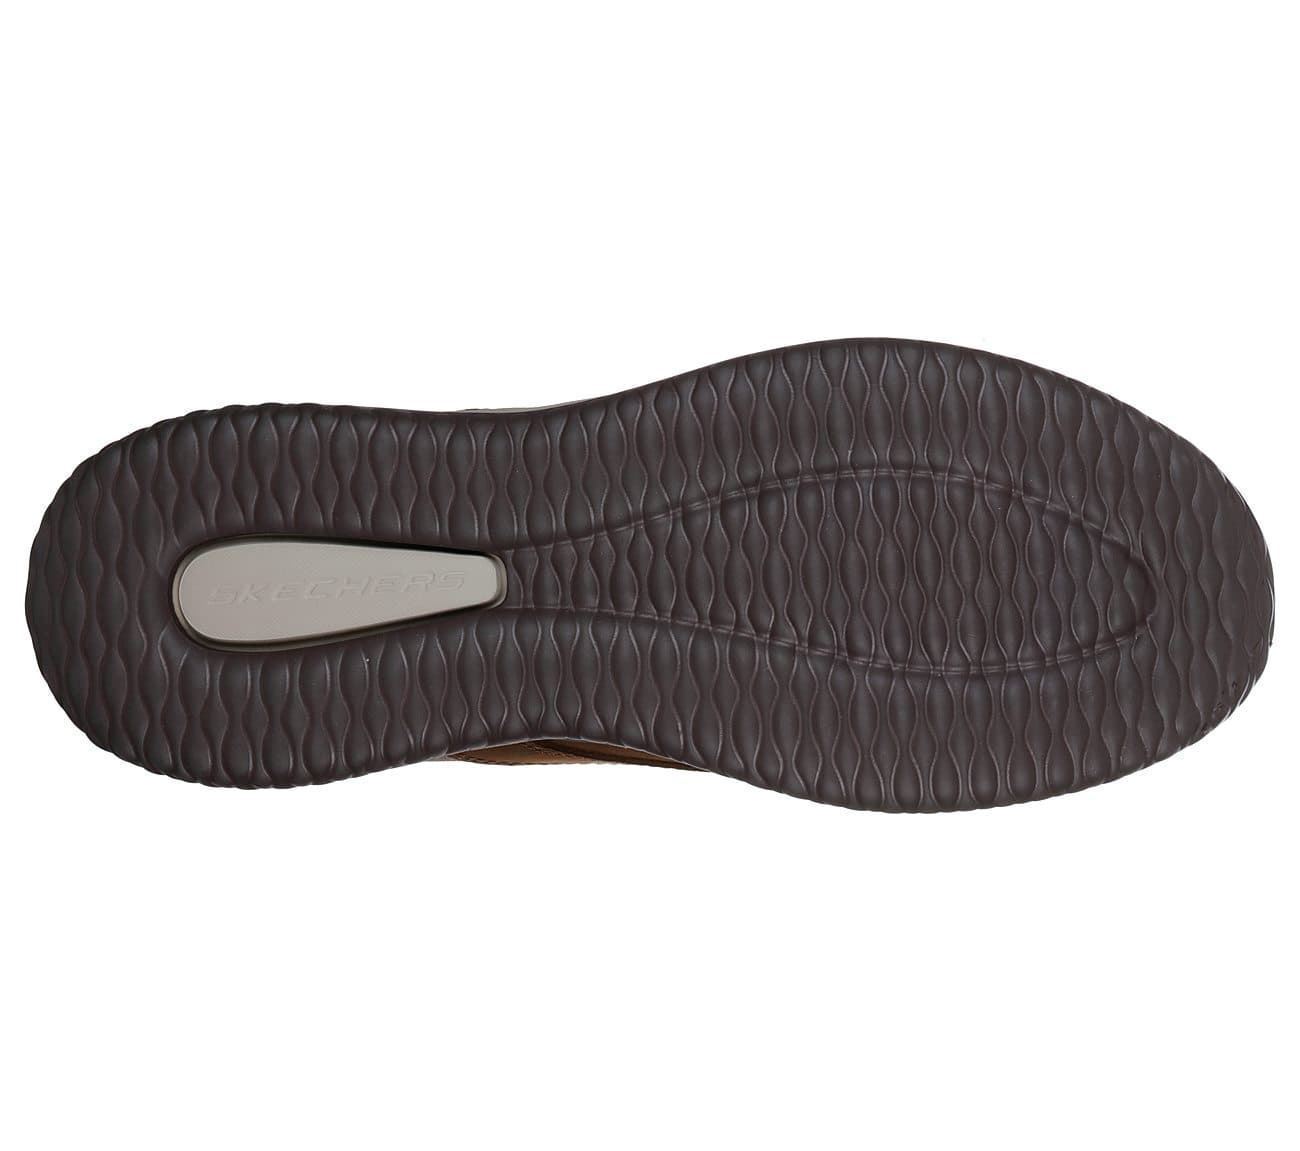 Skechers_ Zapato de piel Delson antigo chico - Imagen 5